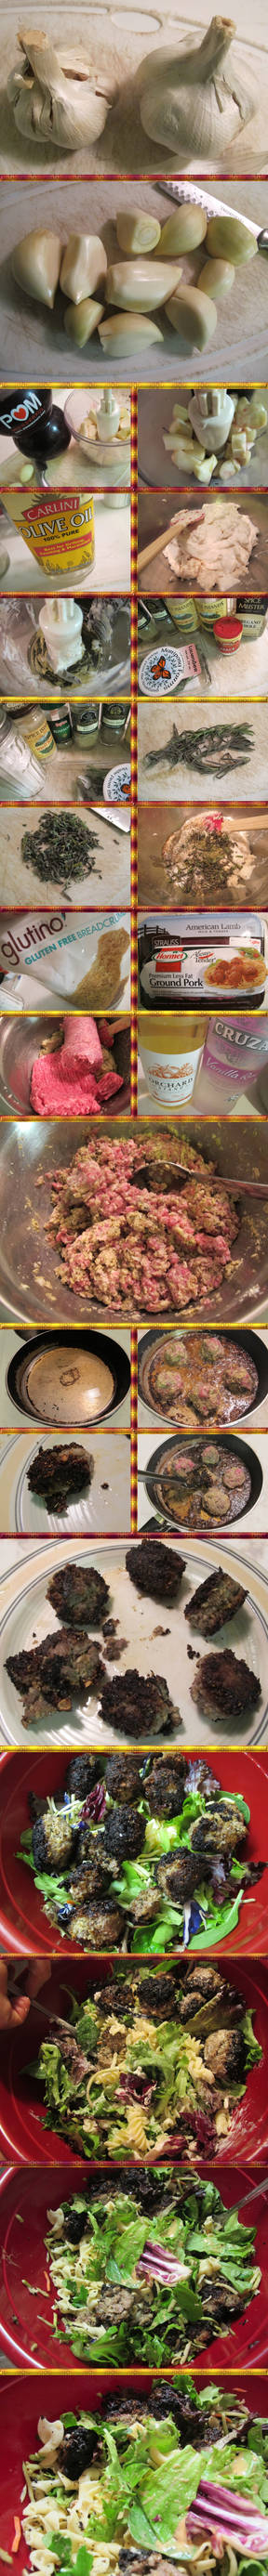 Elephant Garlic Lamb-Pork Meatball Pasta Salad